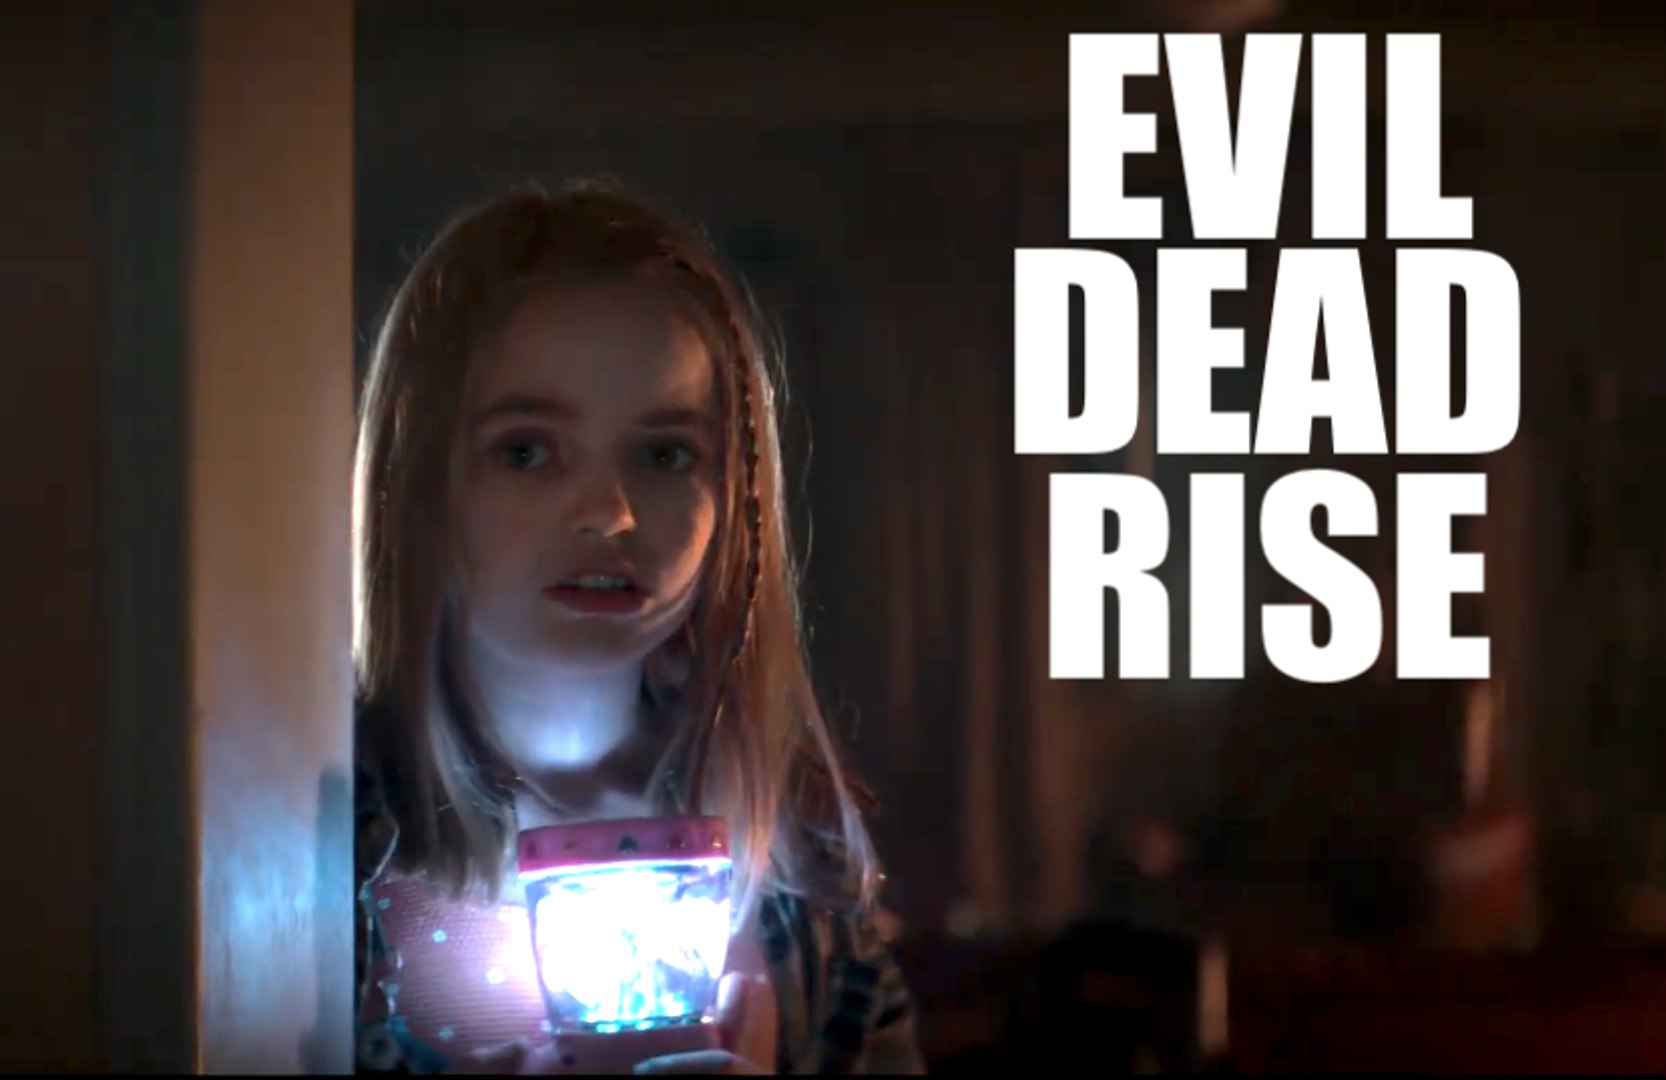 Evil Dead Rise –HD-Trailer.mp4 on Vimeo